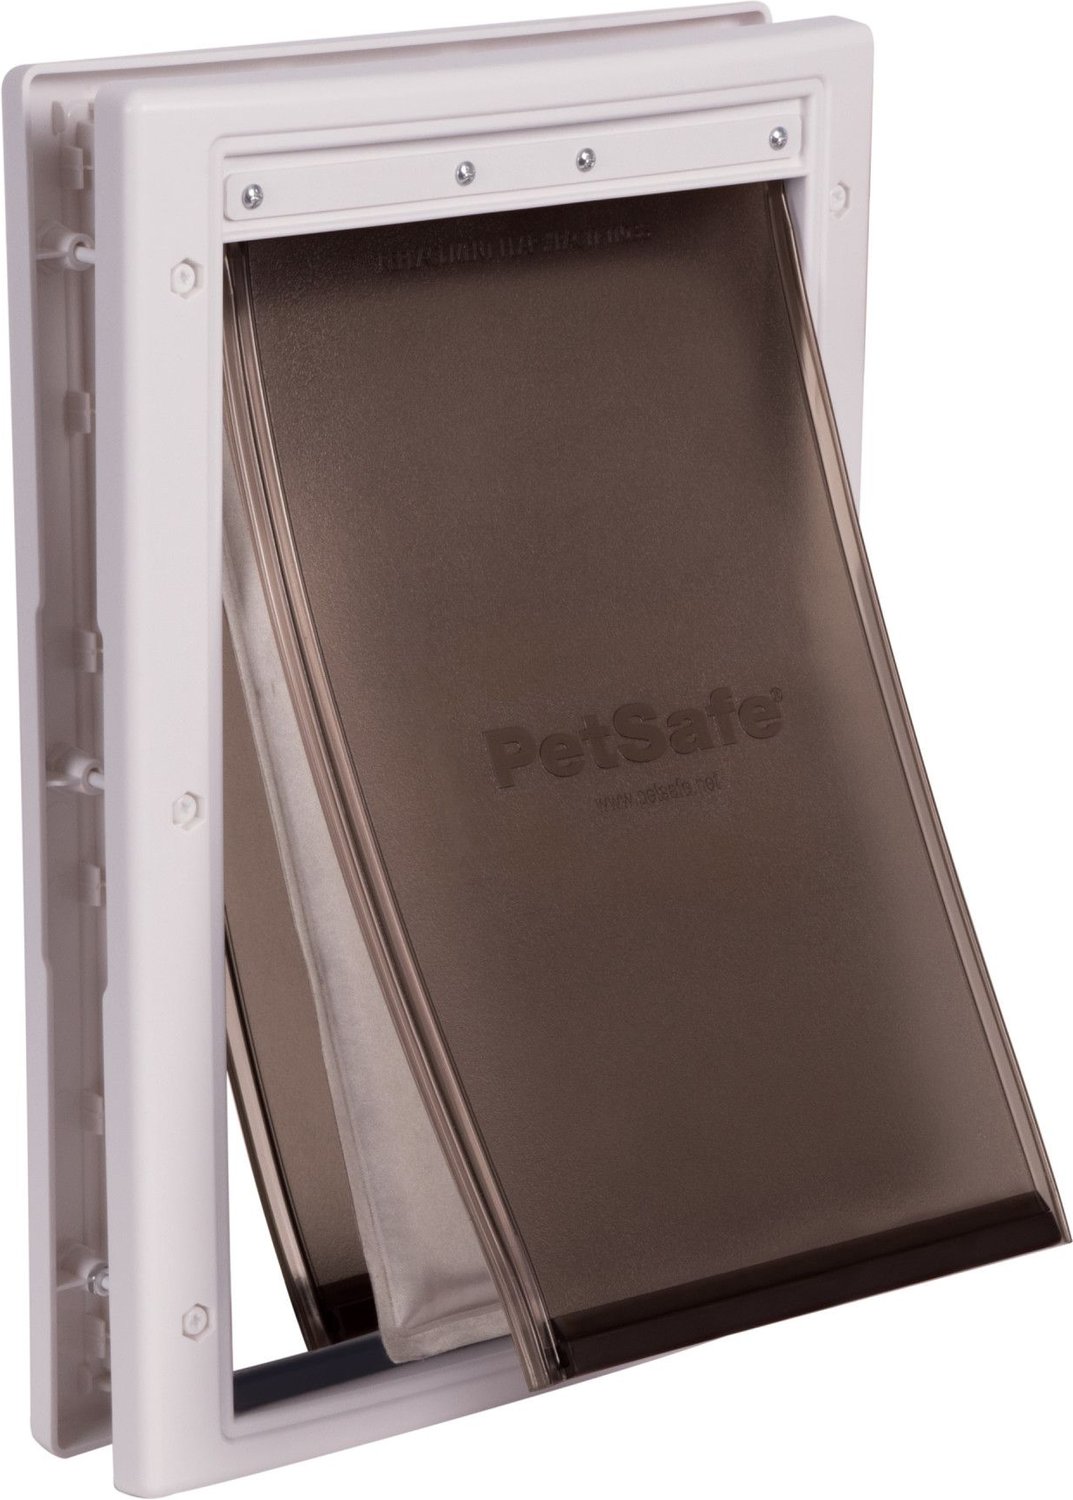 petsafe electronic dog door medium